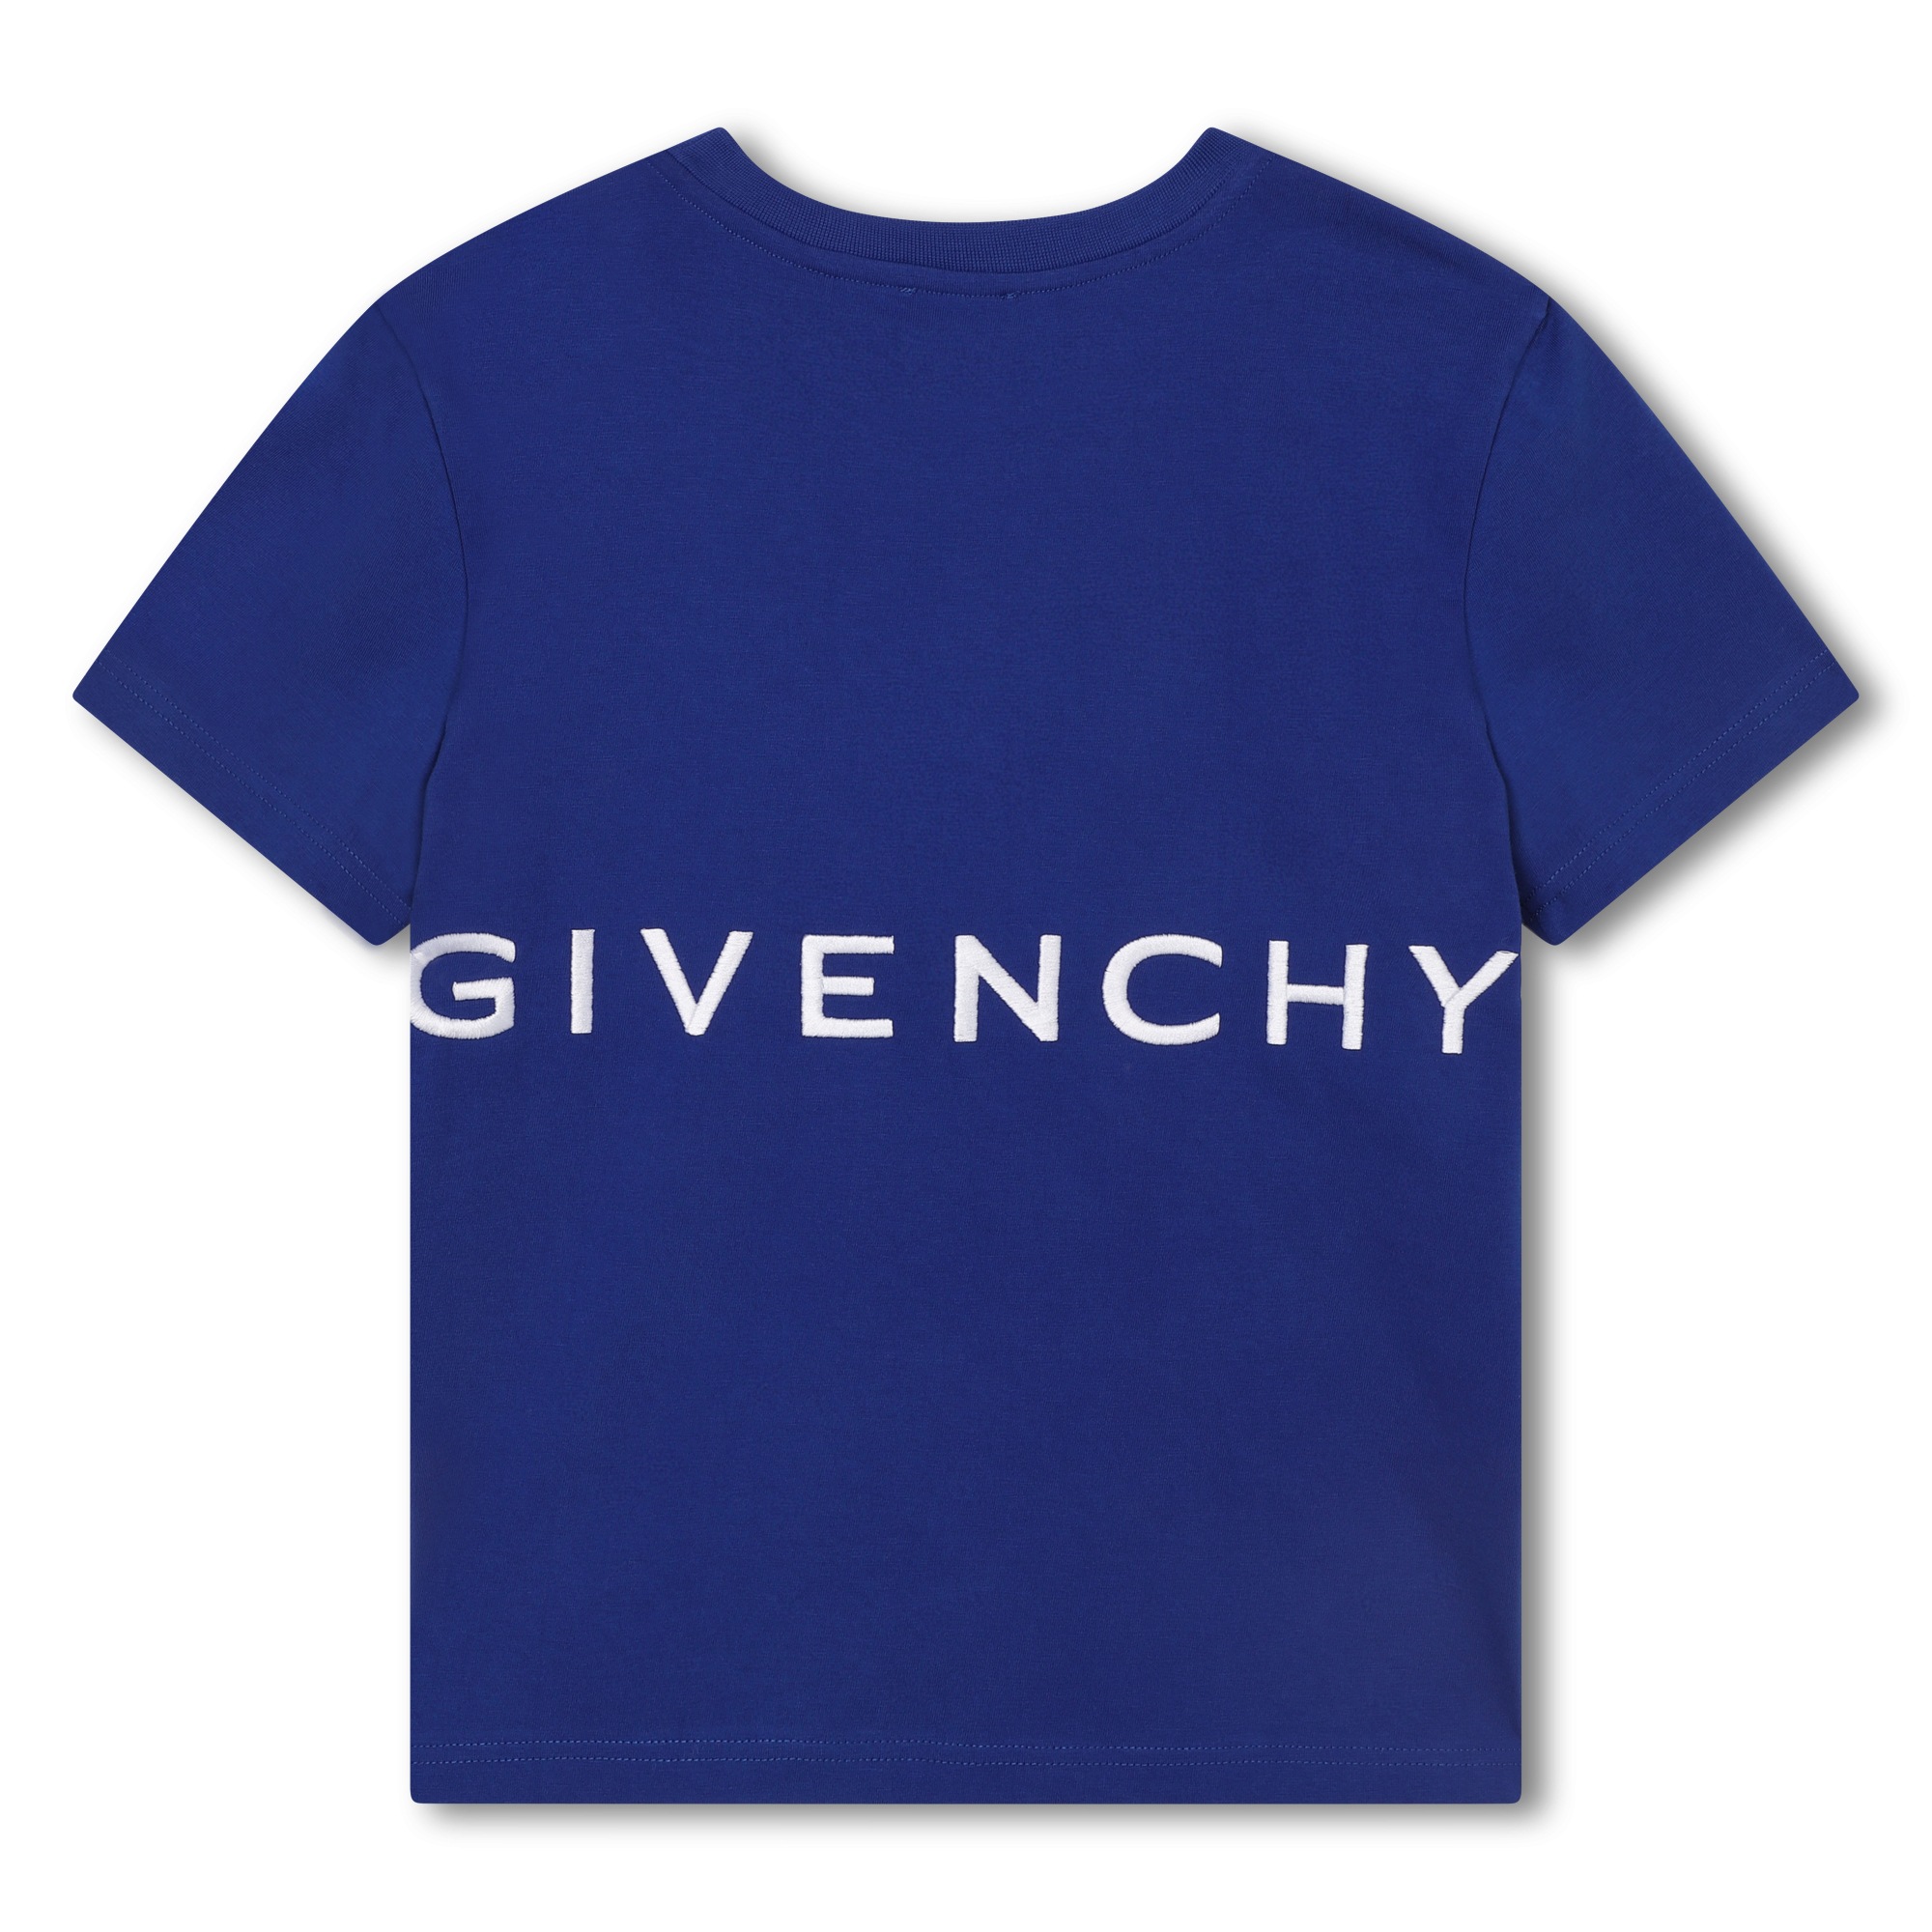 T-shirt manches courtes coton GIVENCHY pour GARCON